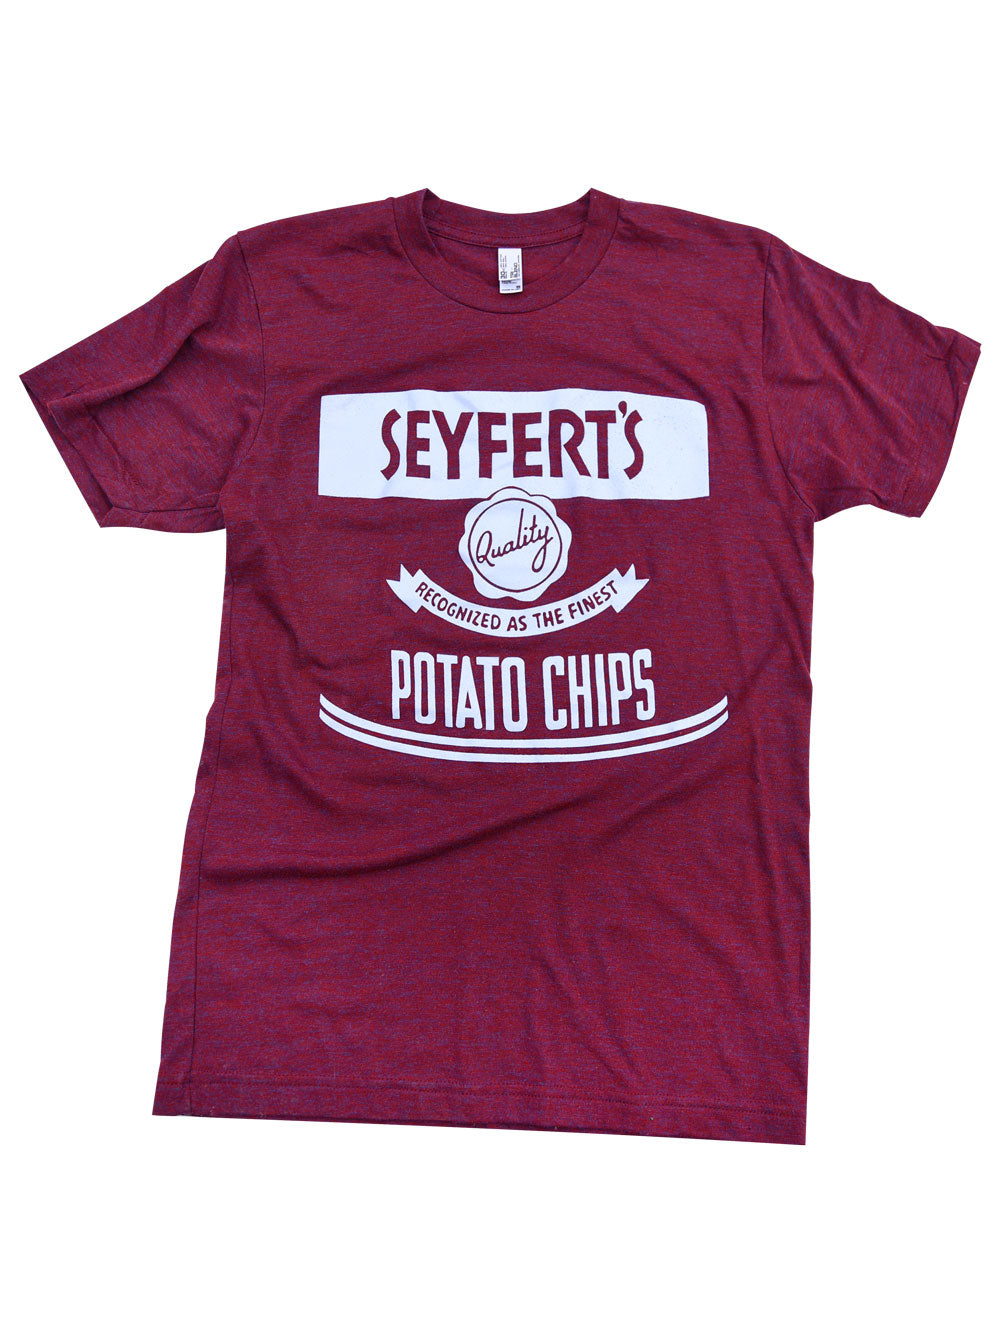 Seyfert's Potato Chips